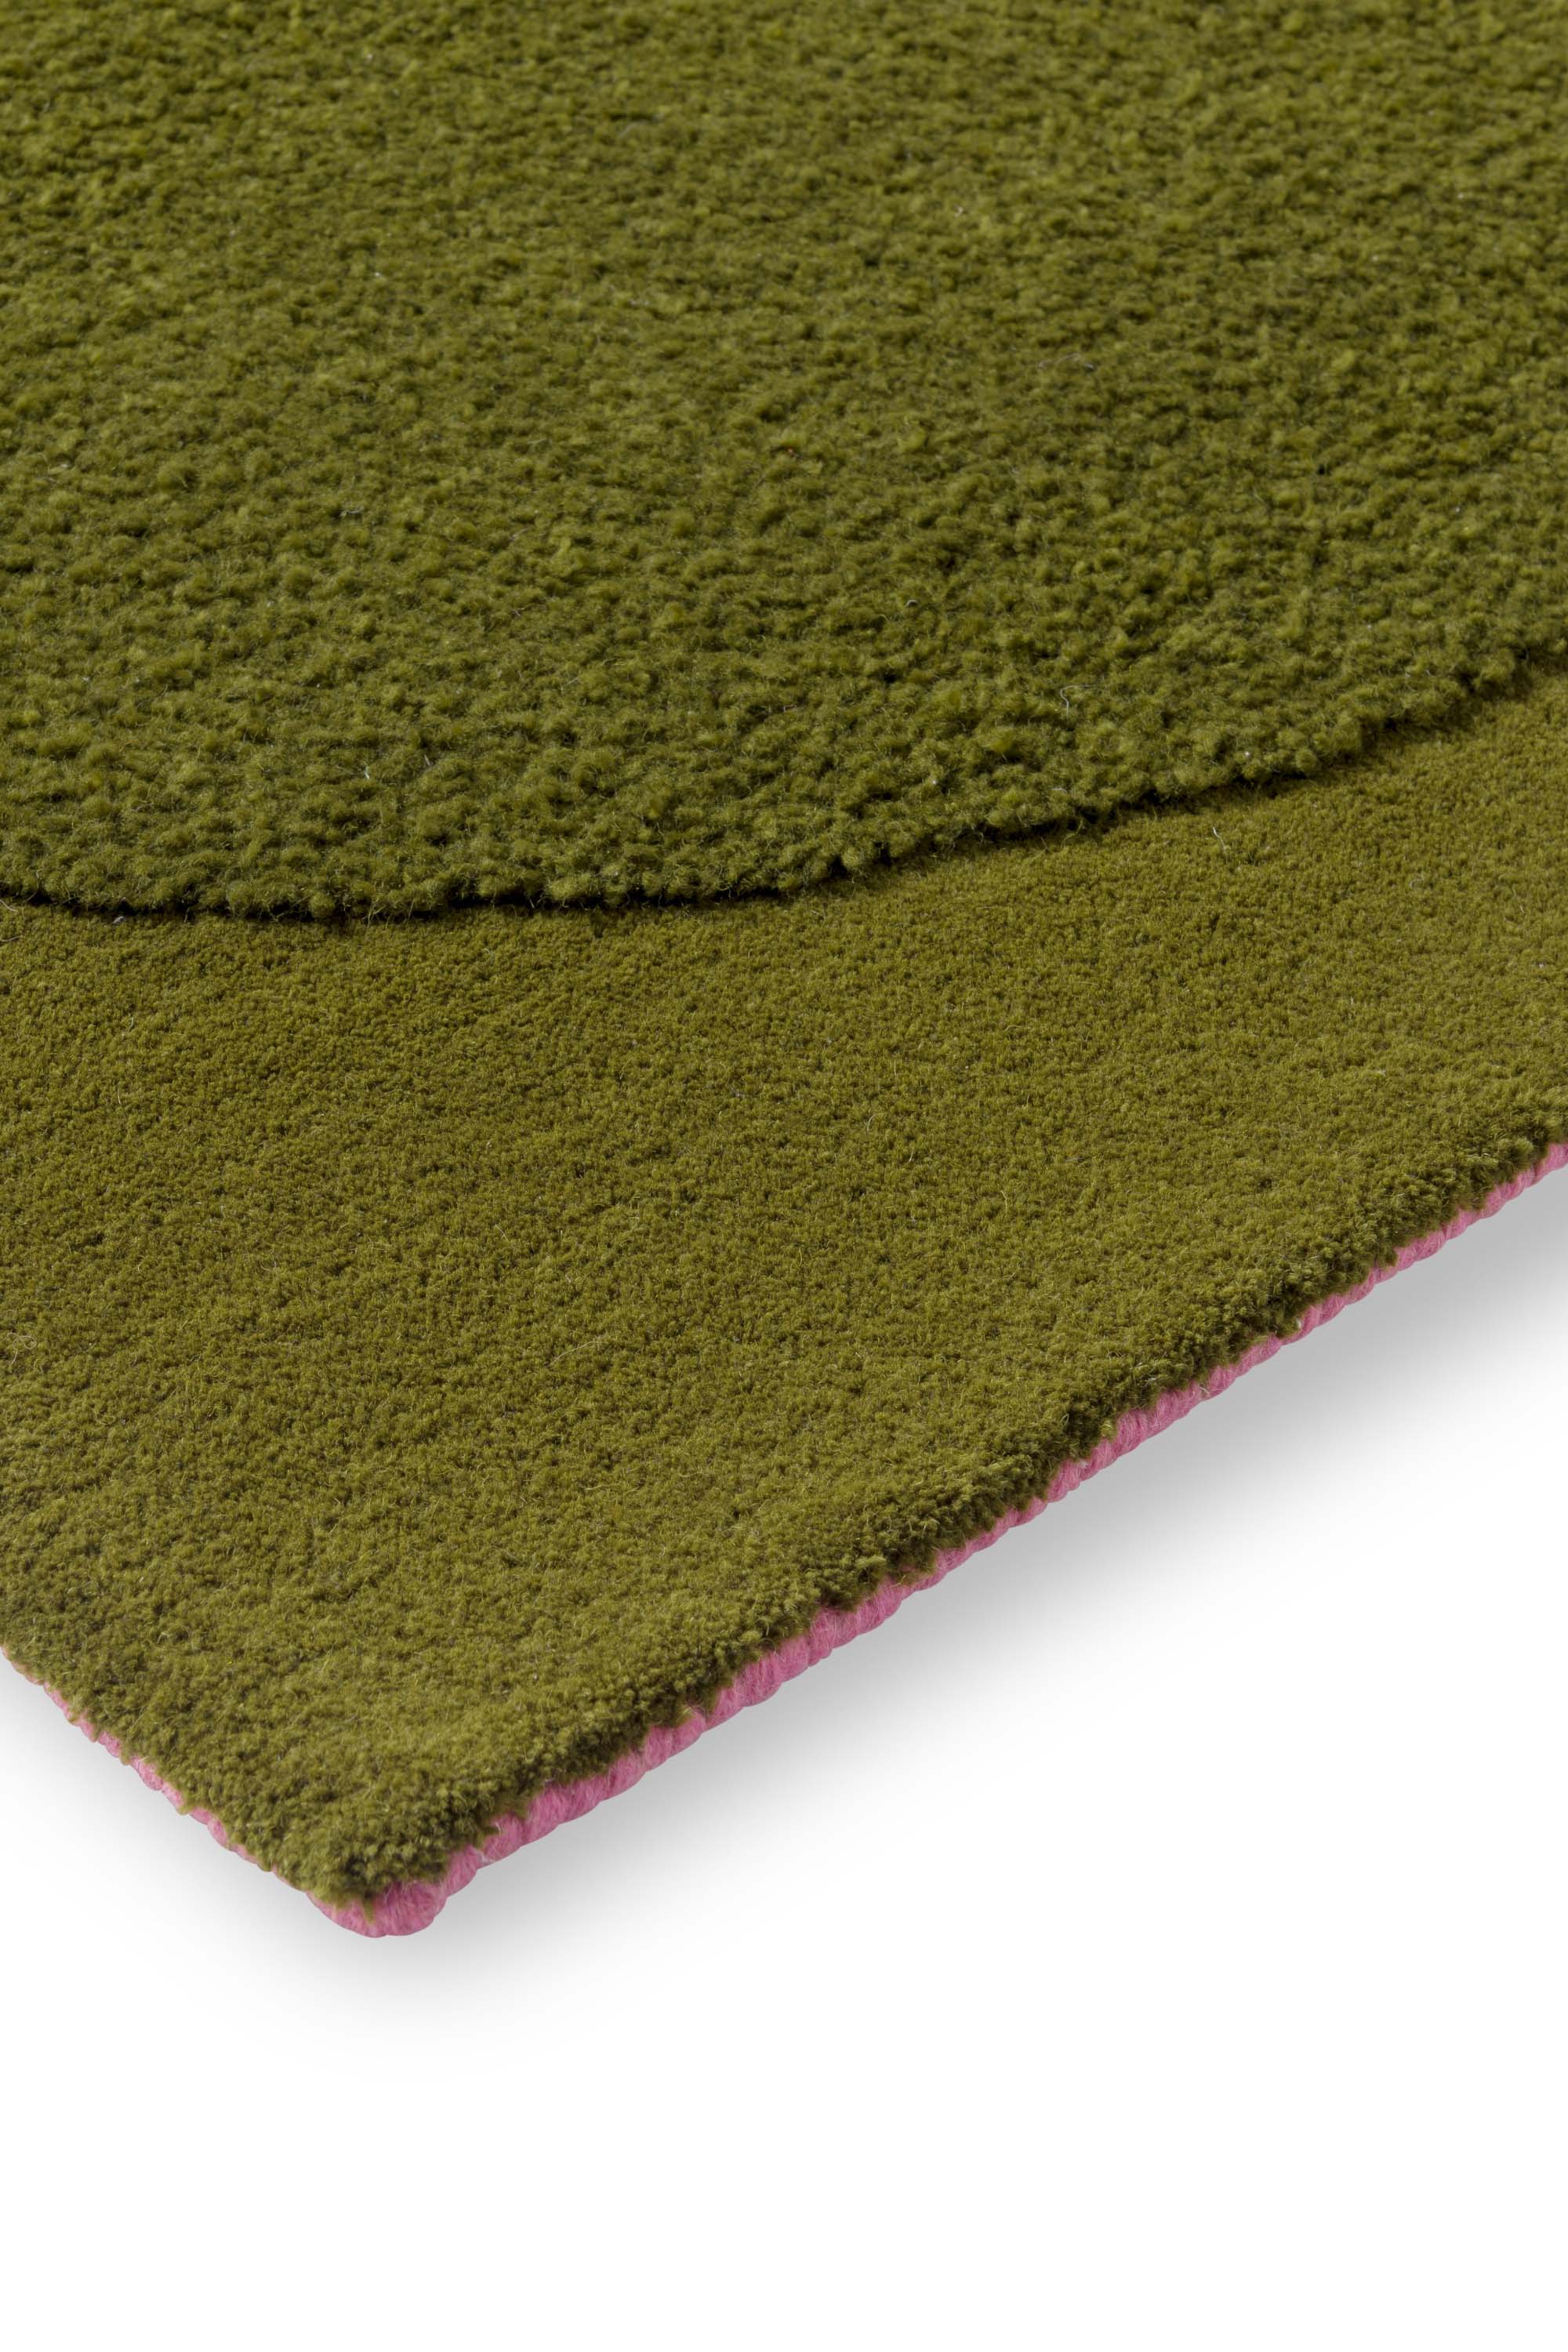 Modern green floral rug